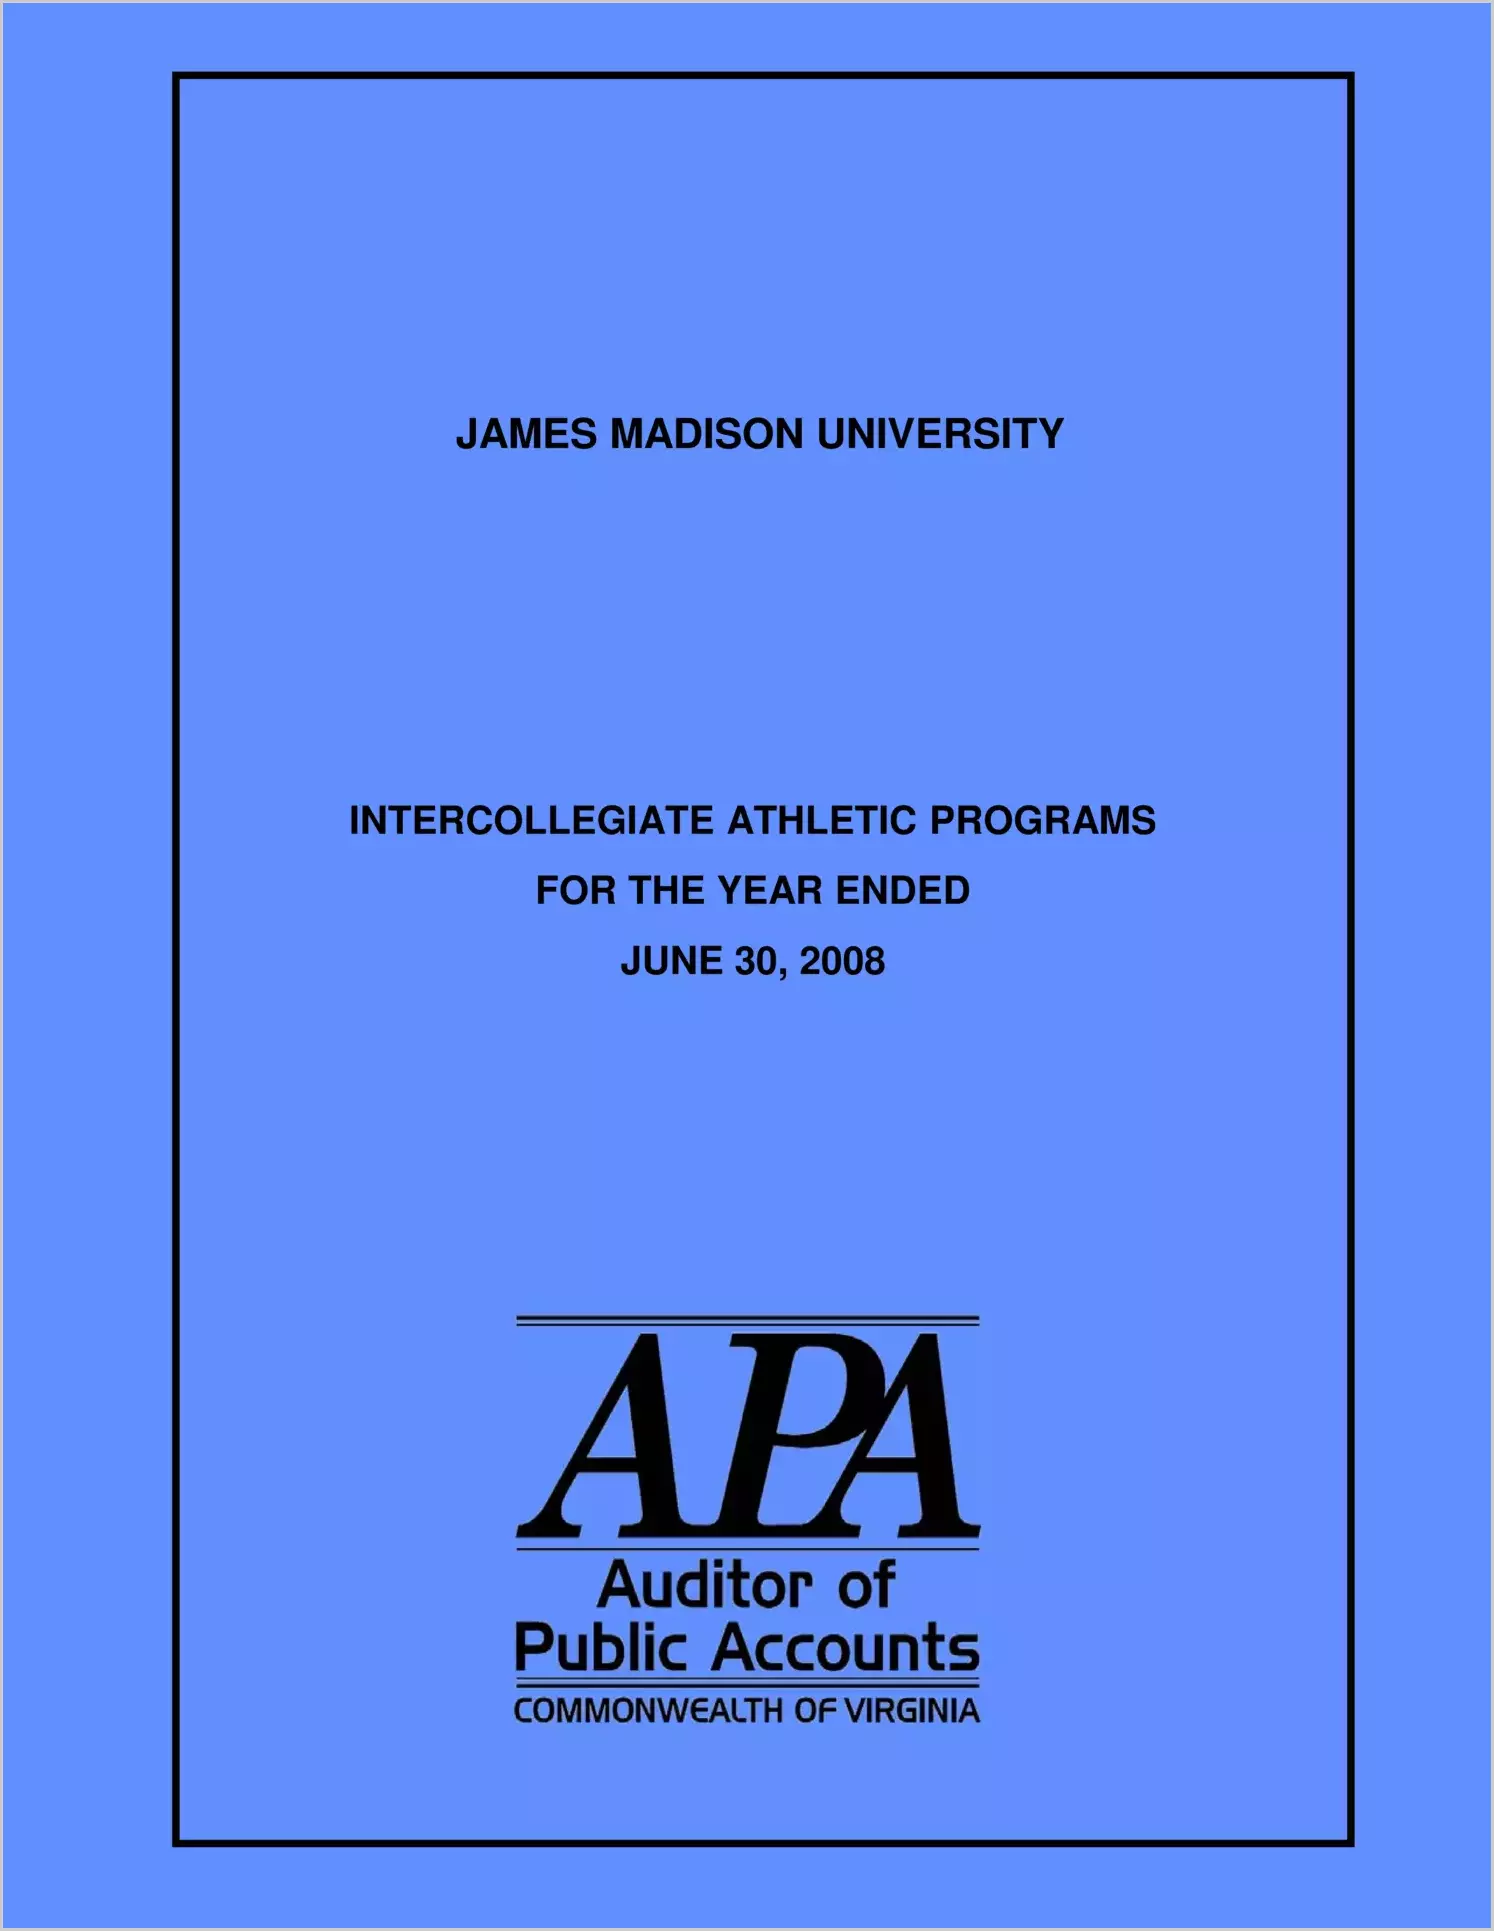 James Madison University Intercollegiate Athletics Programs for the year ended June 30, 2008